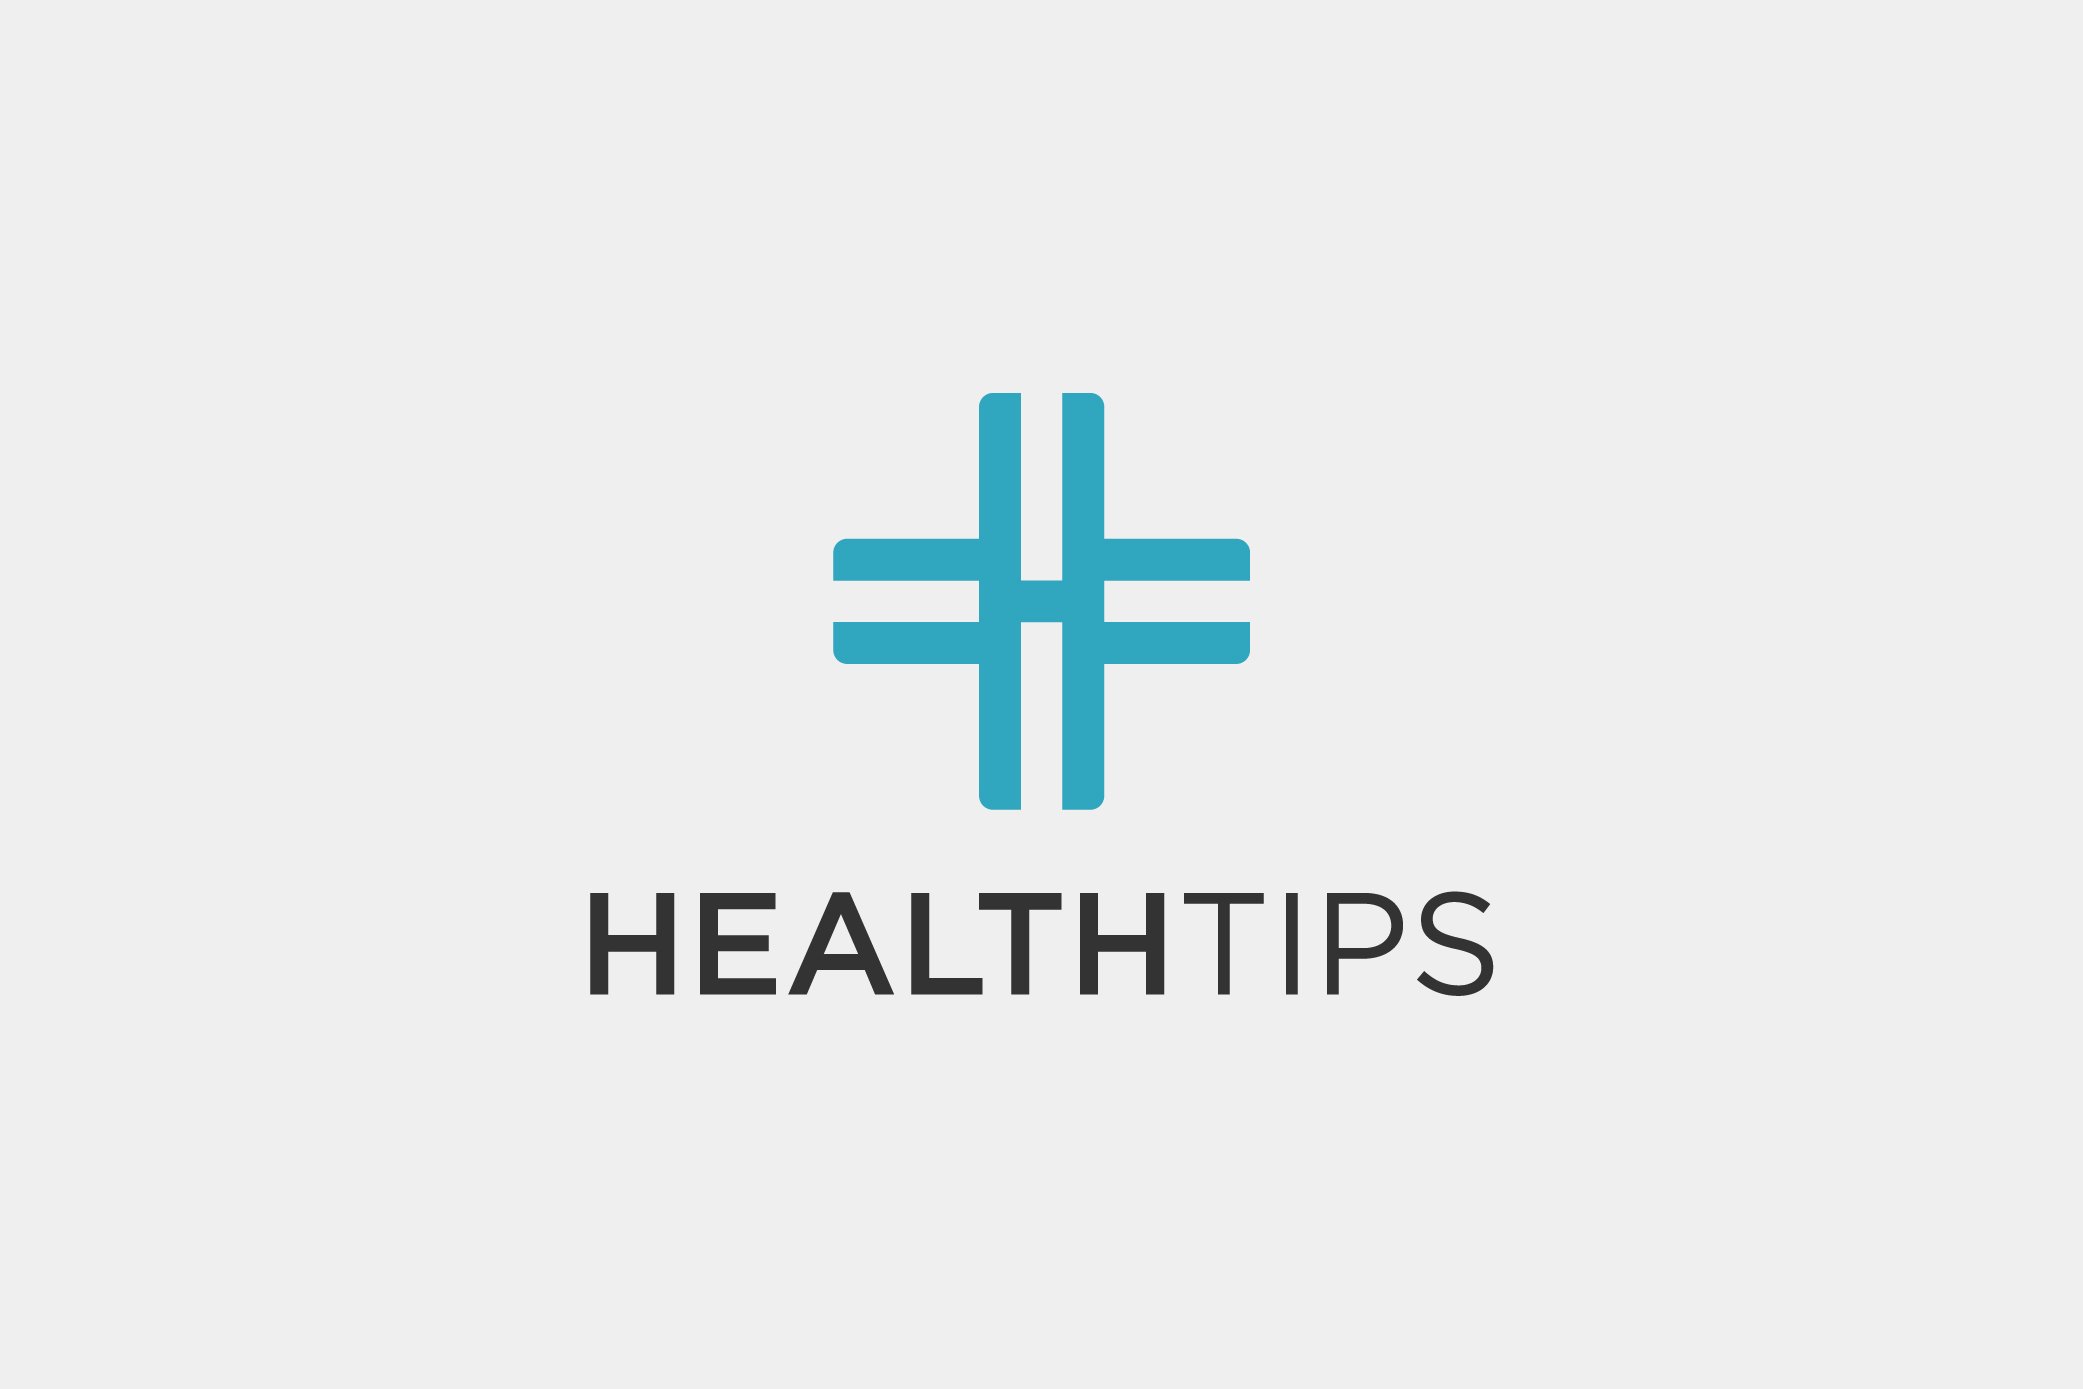 Health symbol and TH monogram cover image.